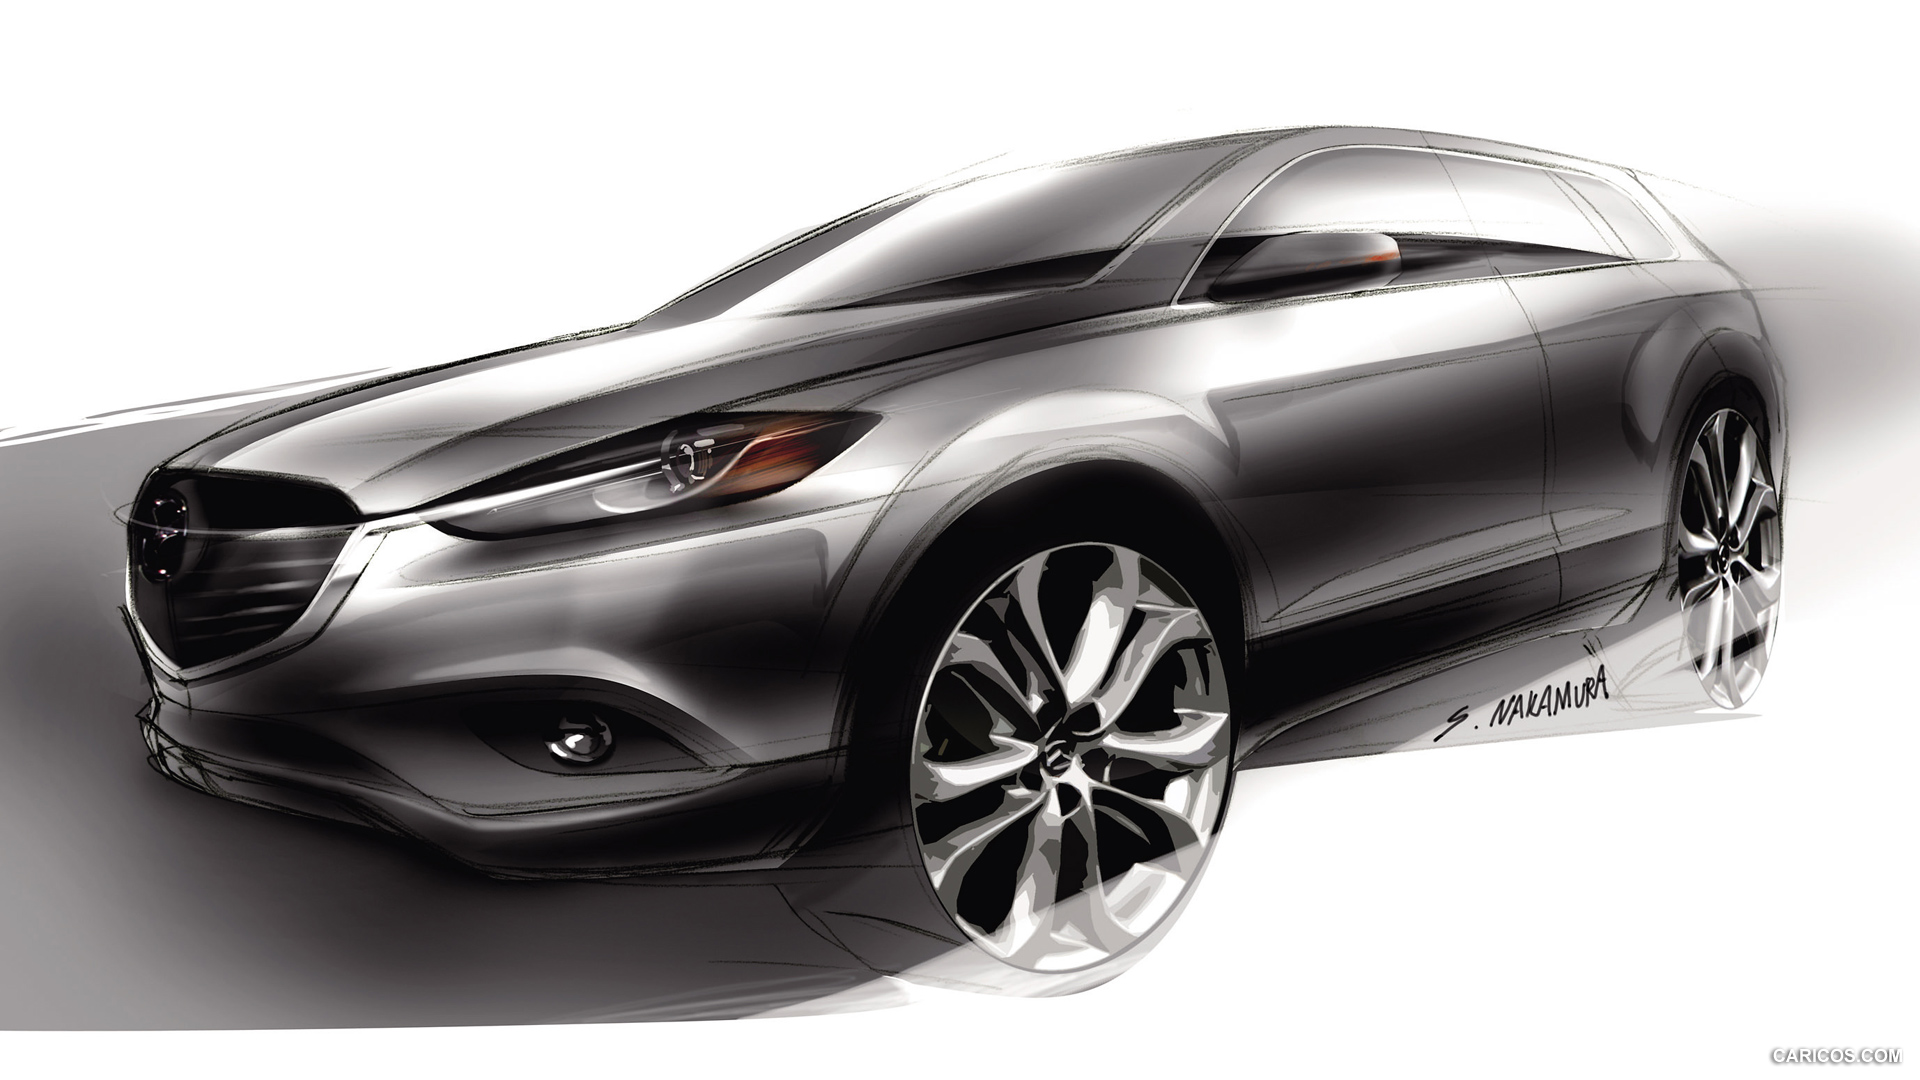 2013 Mazda CX-9  - Design Sketch, #15 of 17